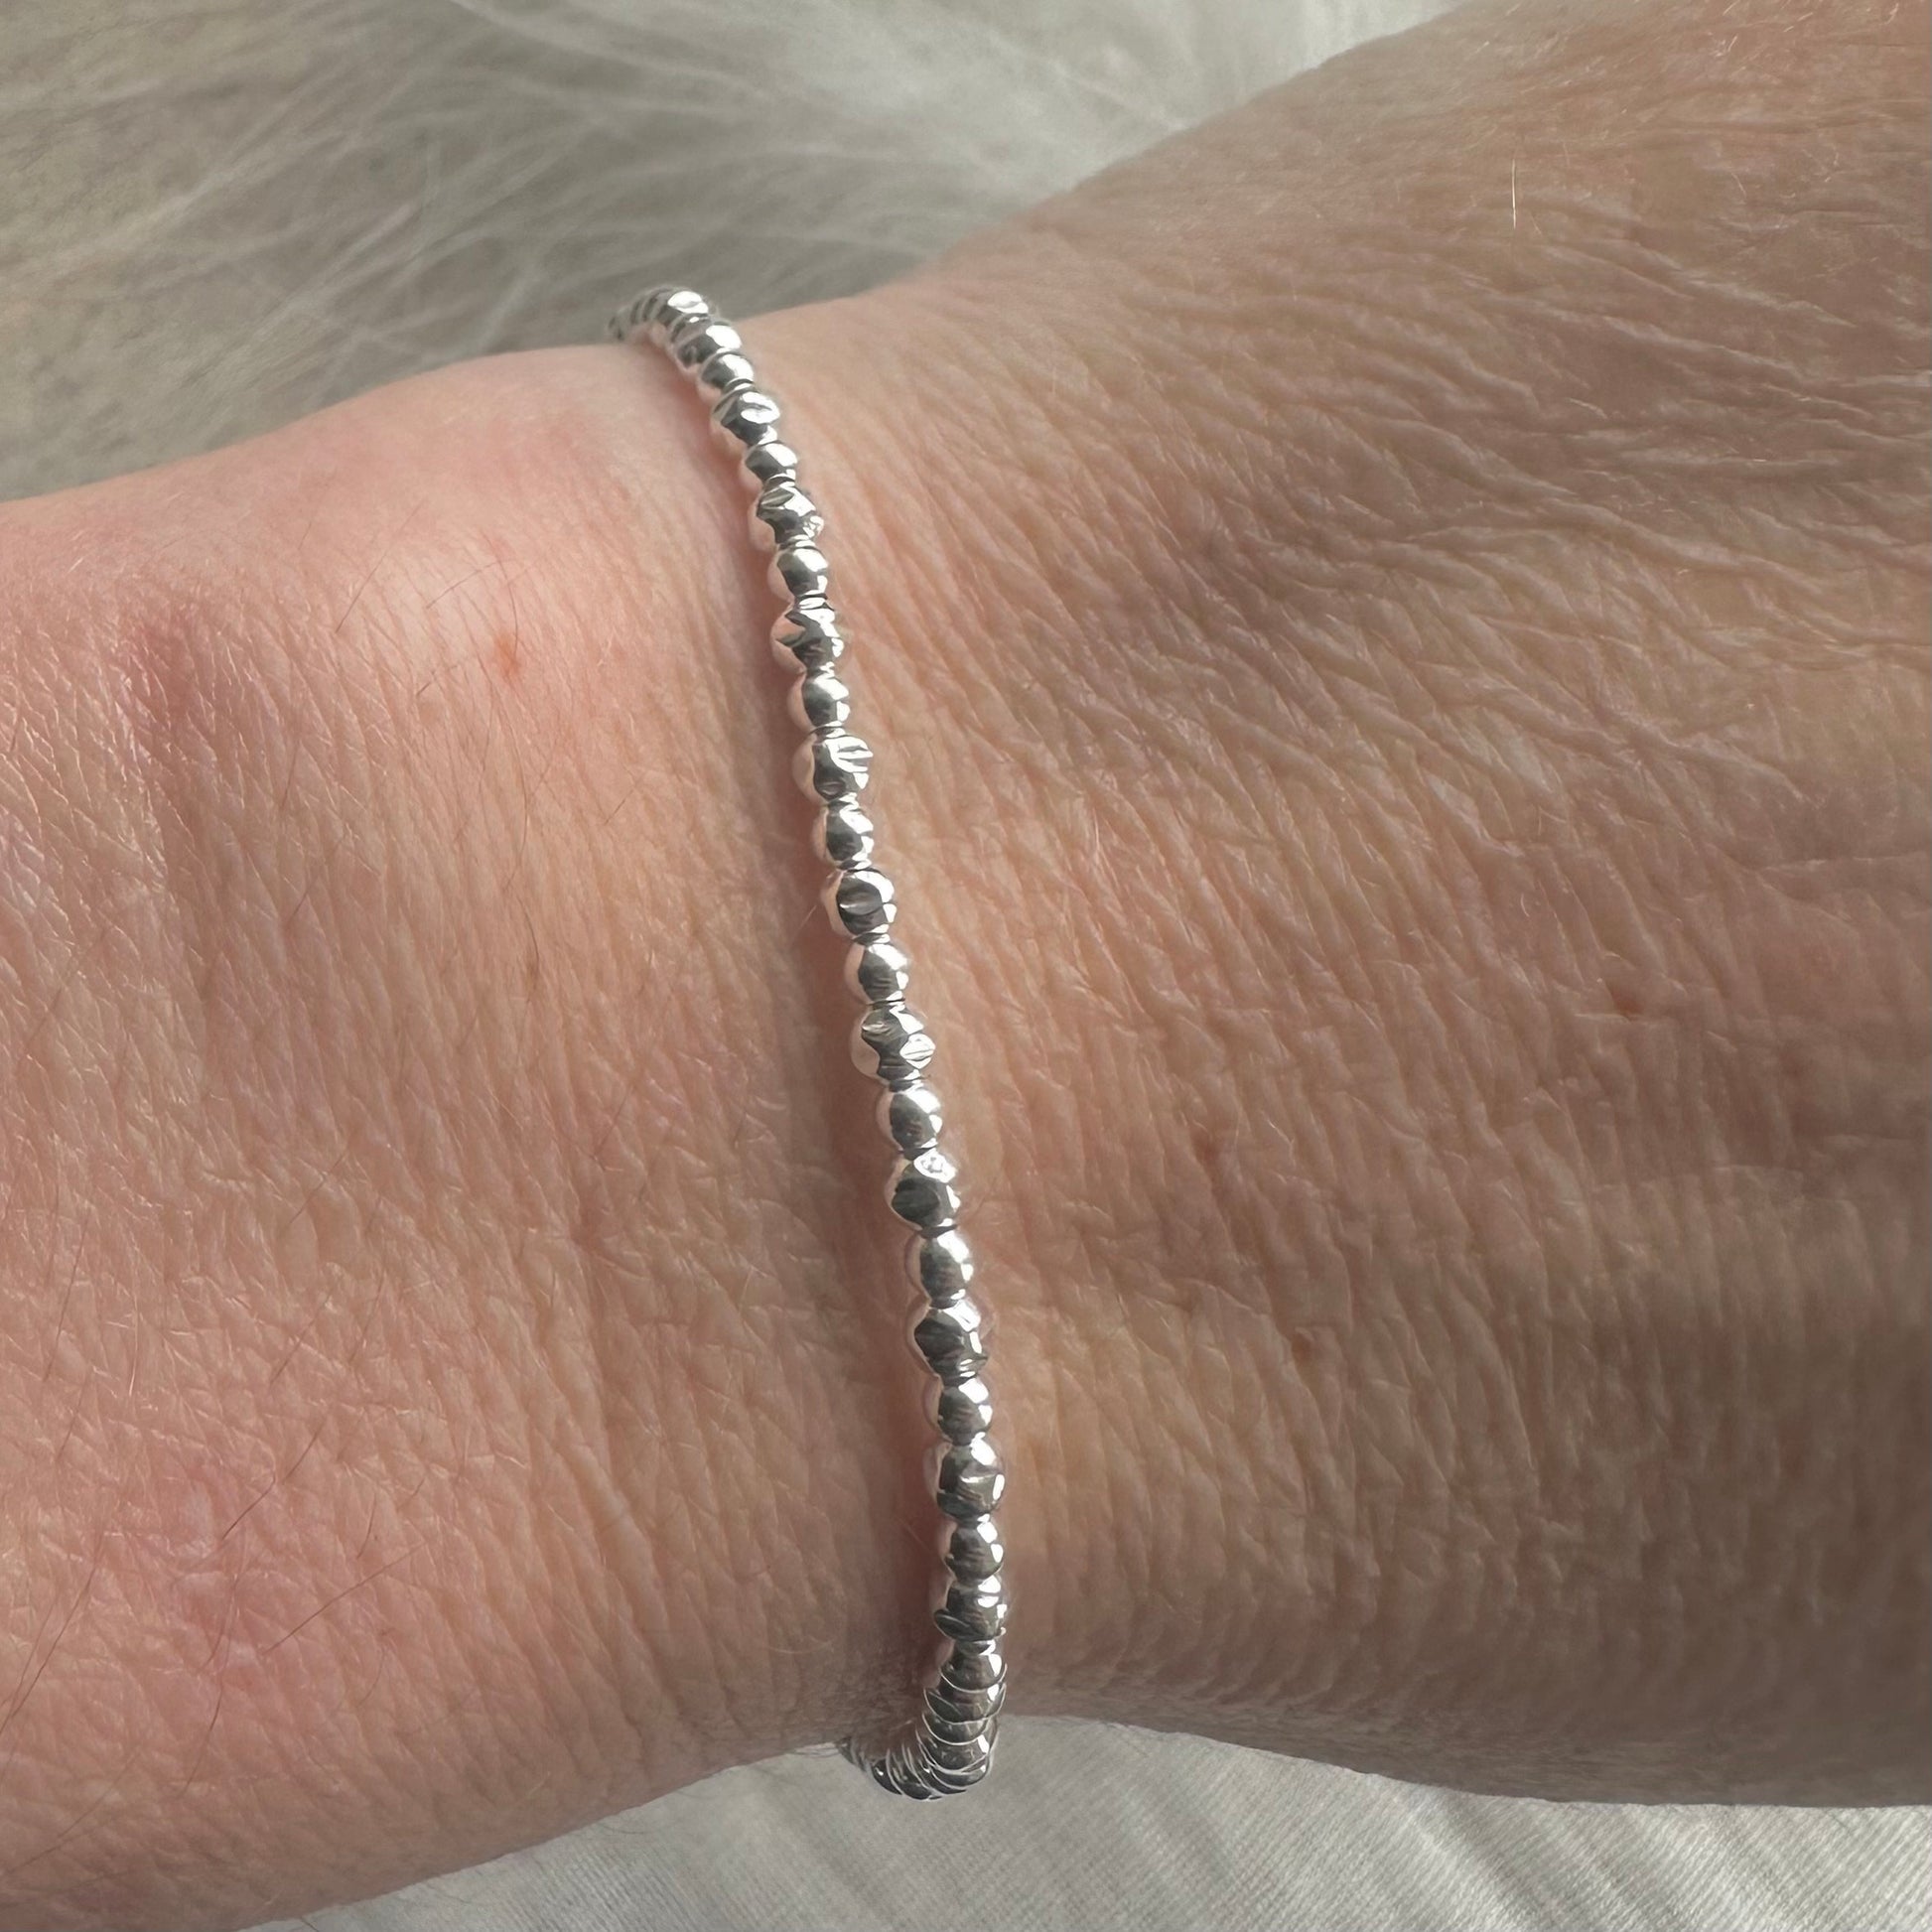 Stretchy Textured Bead Bracelet, Dainty Layering Sterling Silver bracelet with textured beads